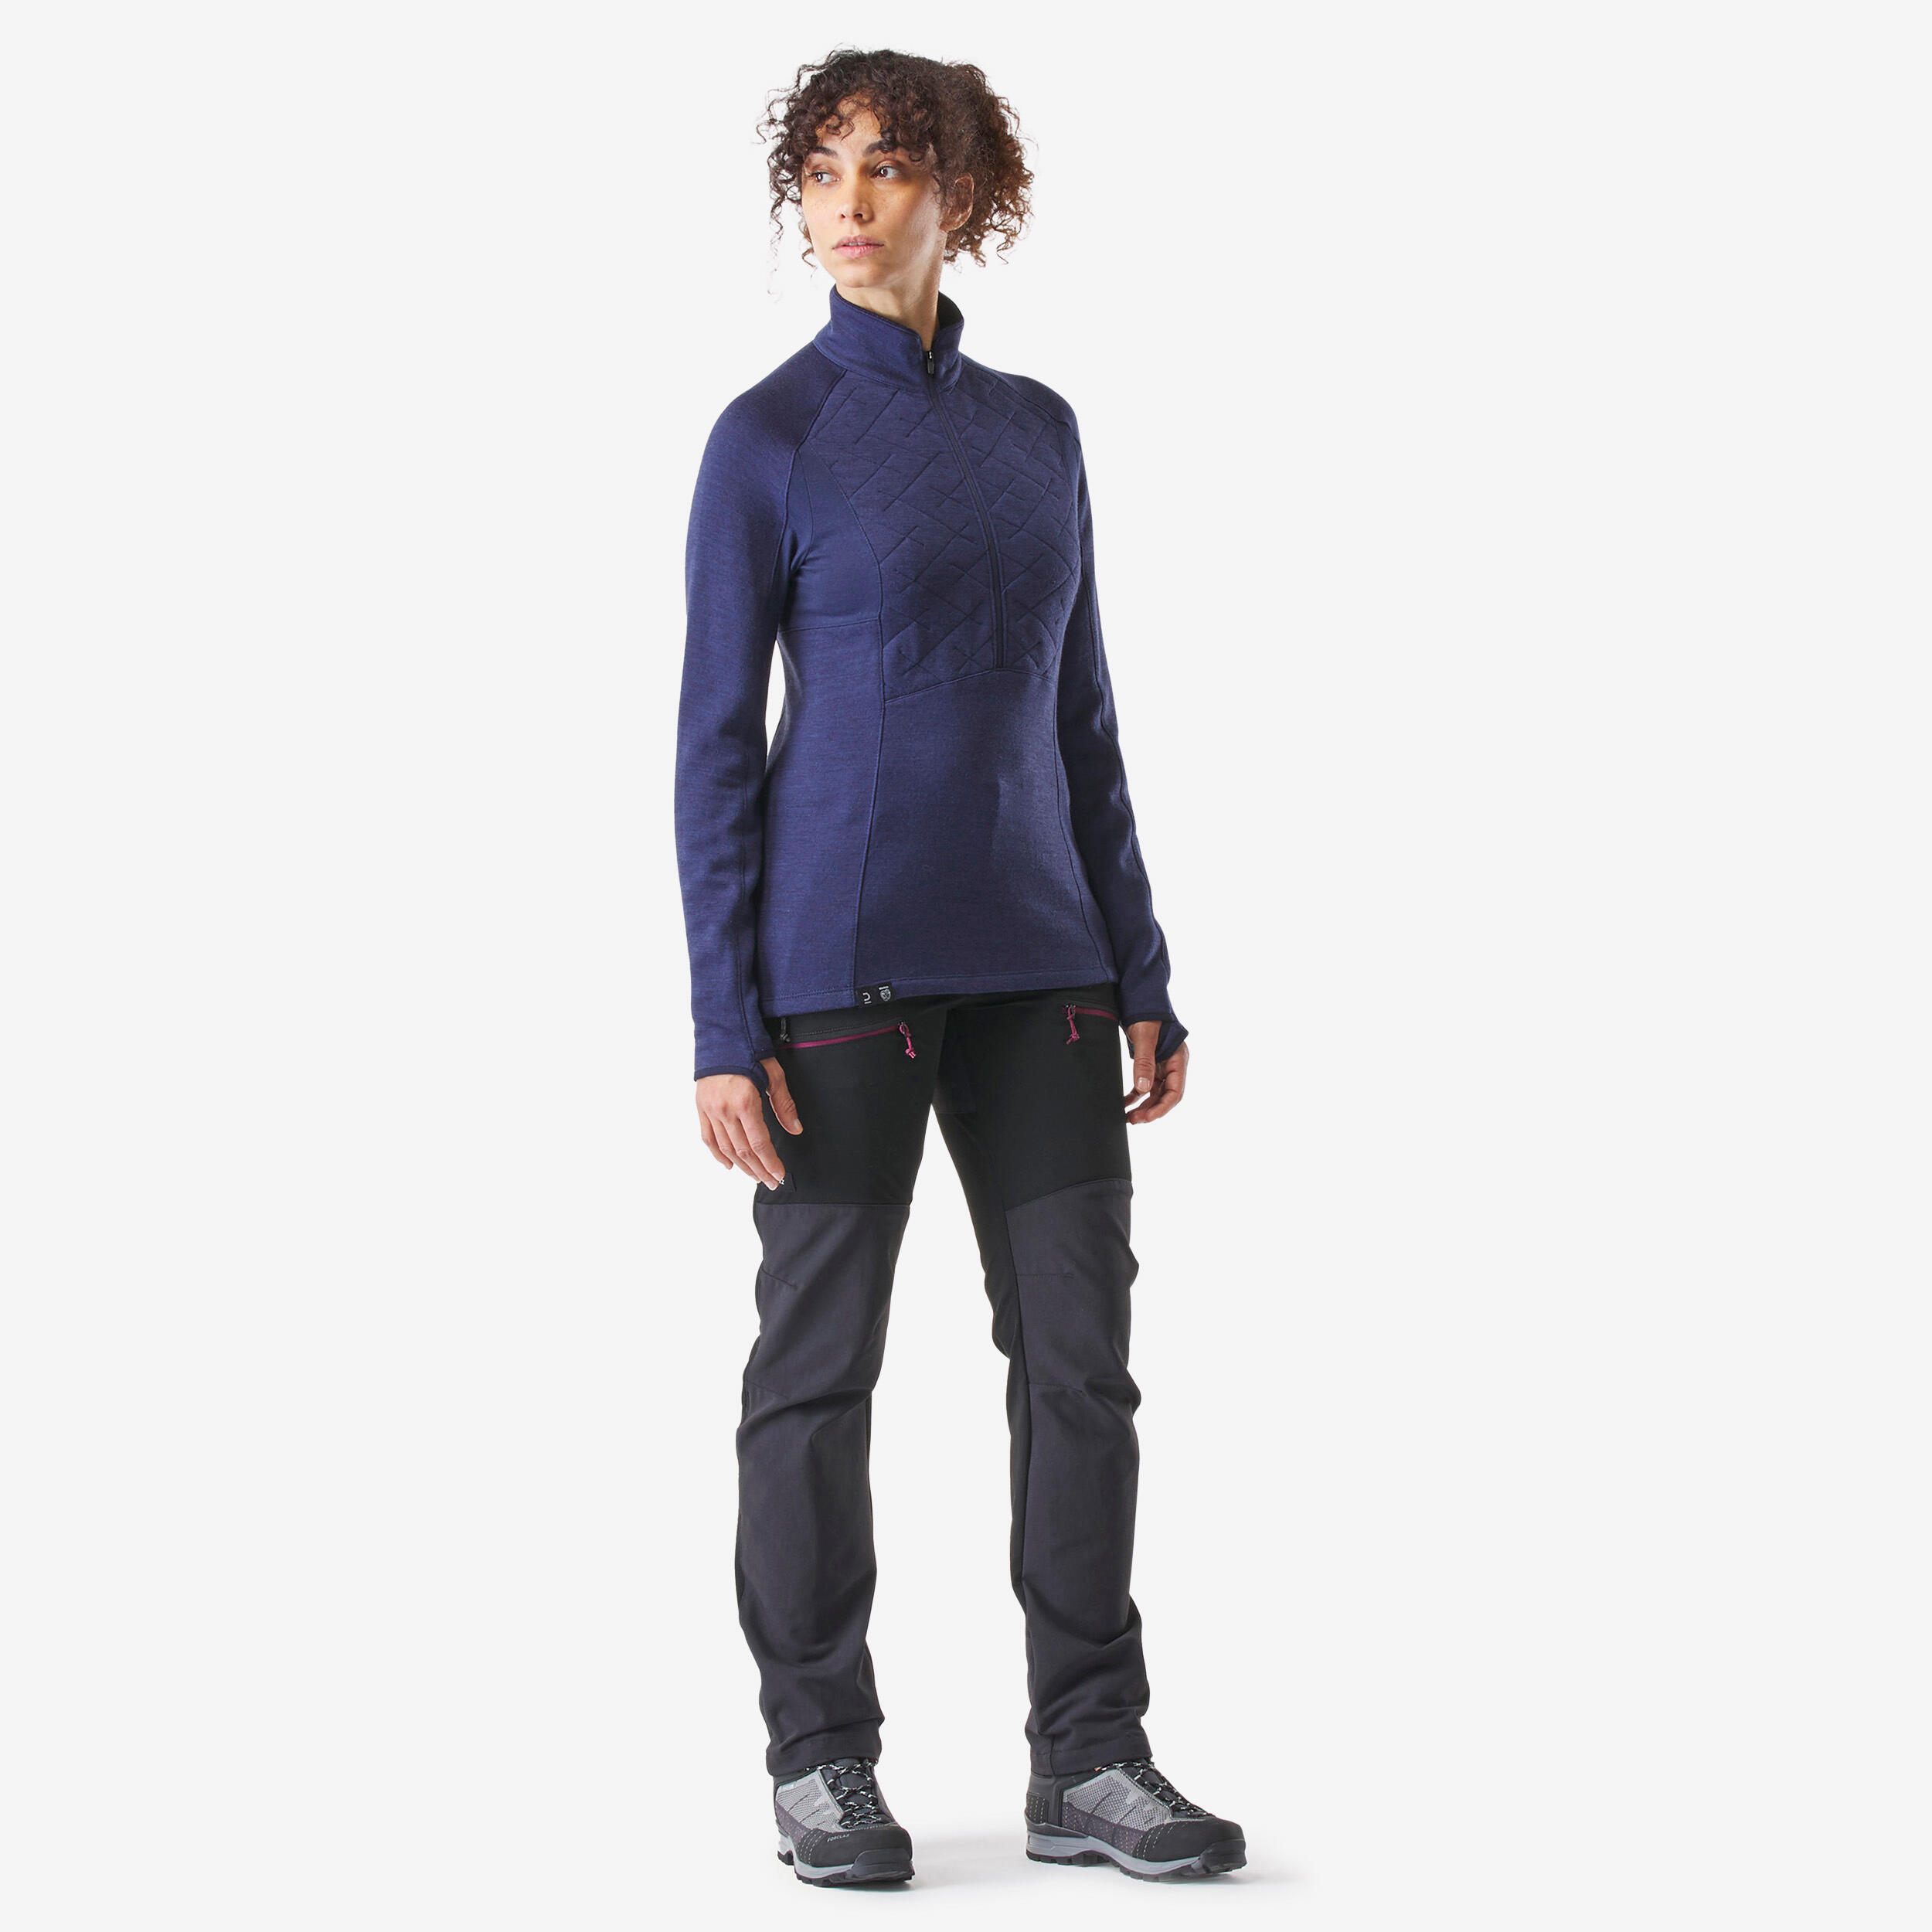 FORCLAZ Women's Merino Wool Long-Sleeved Trekking T-Shirt - MT900